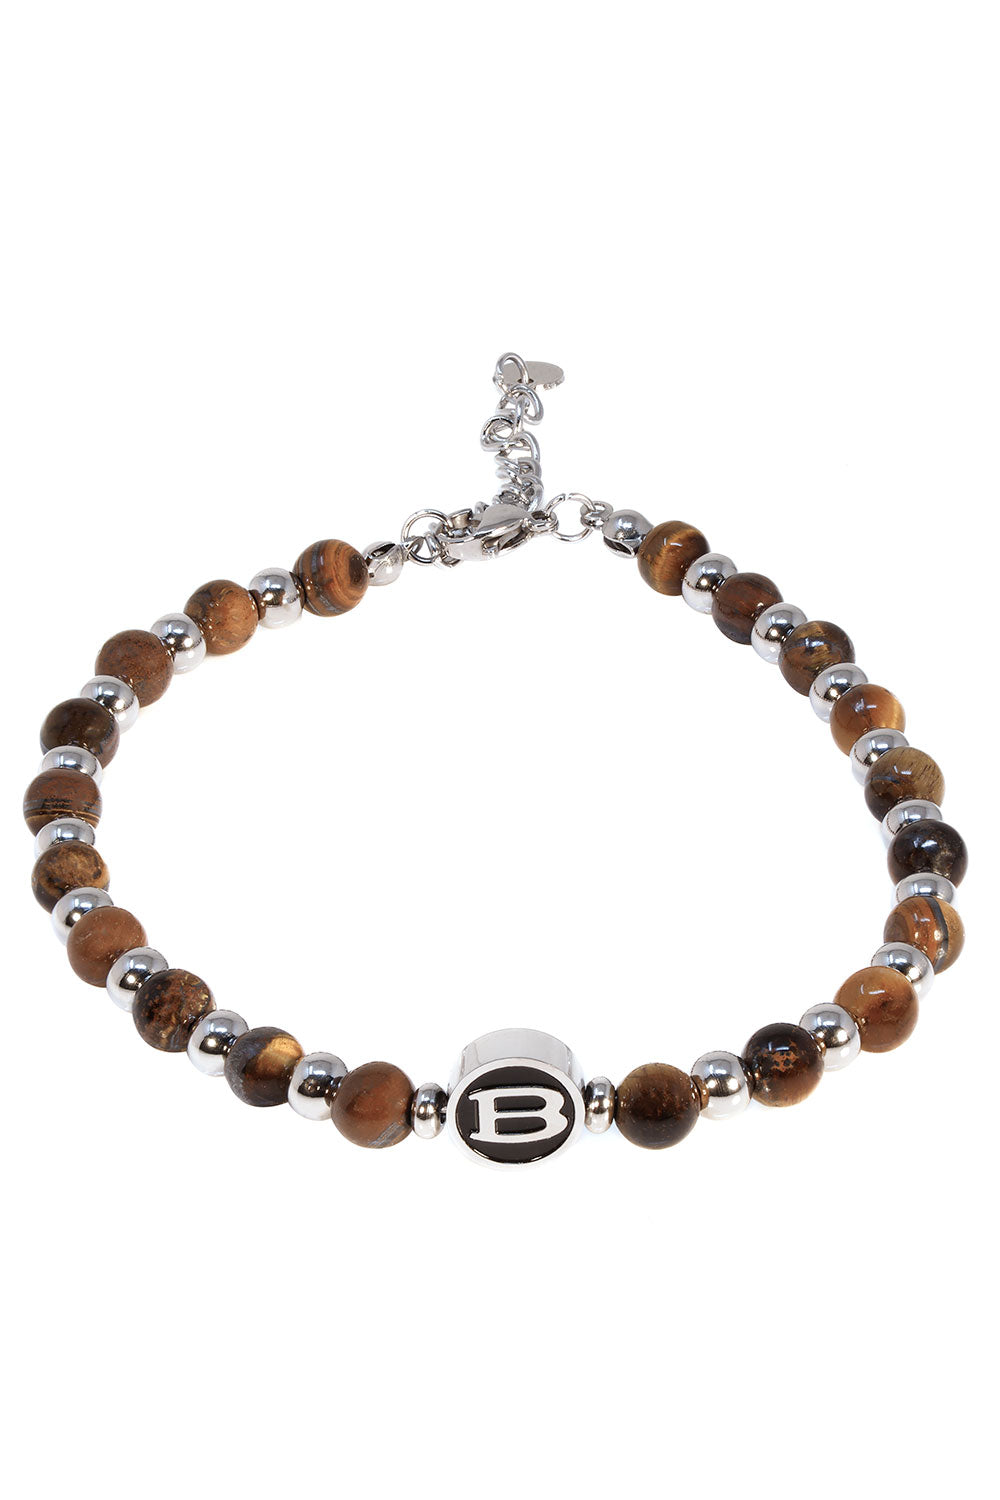 Barabas Unisex Woodgrain Jasper and Silver Beads Bracelets 4BB11 Coffee